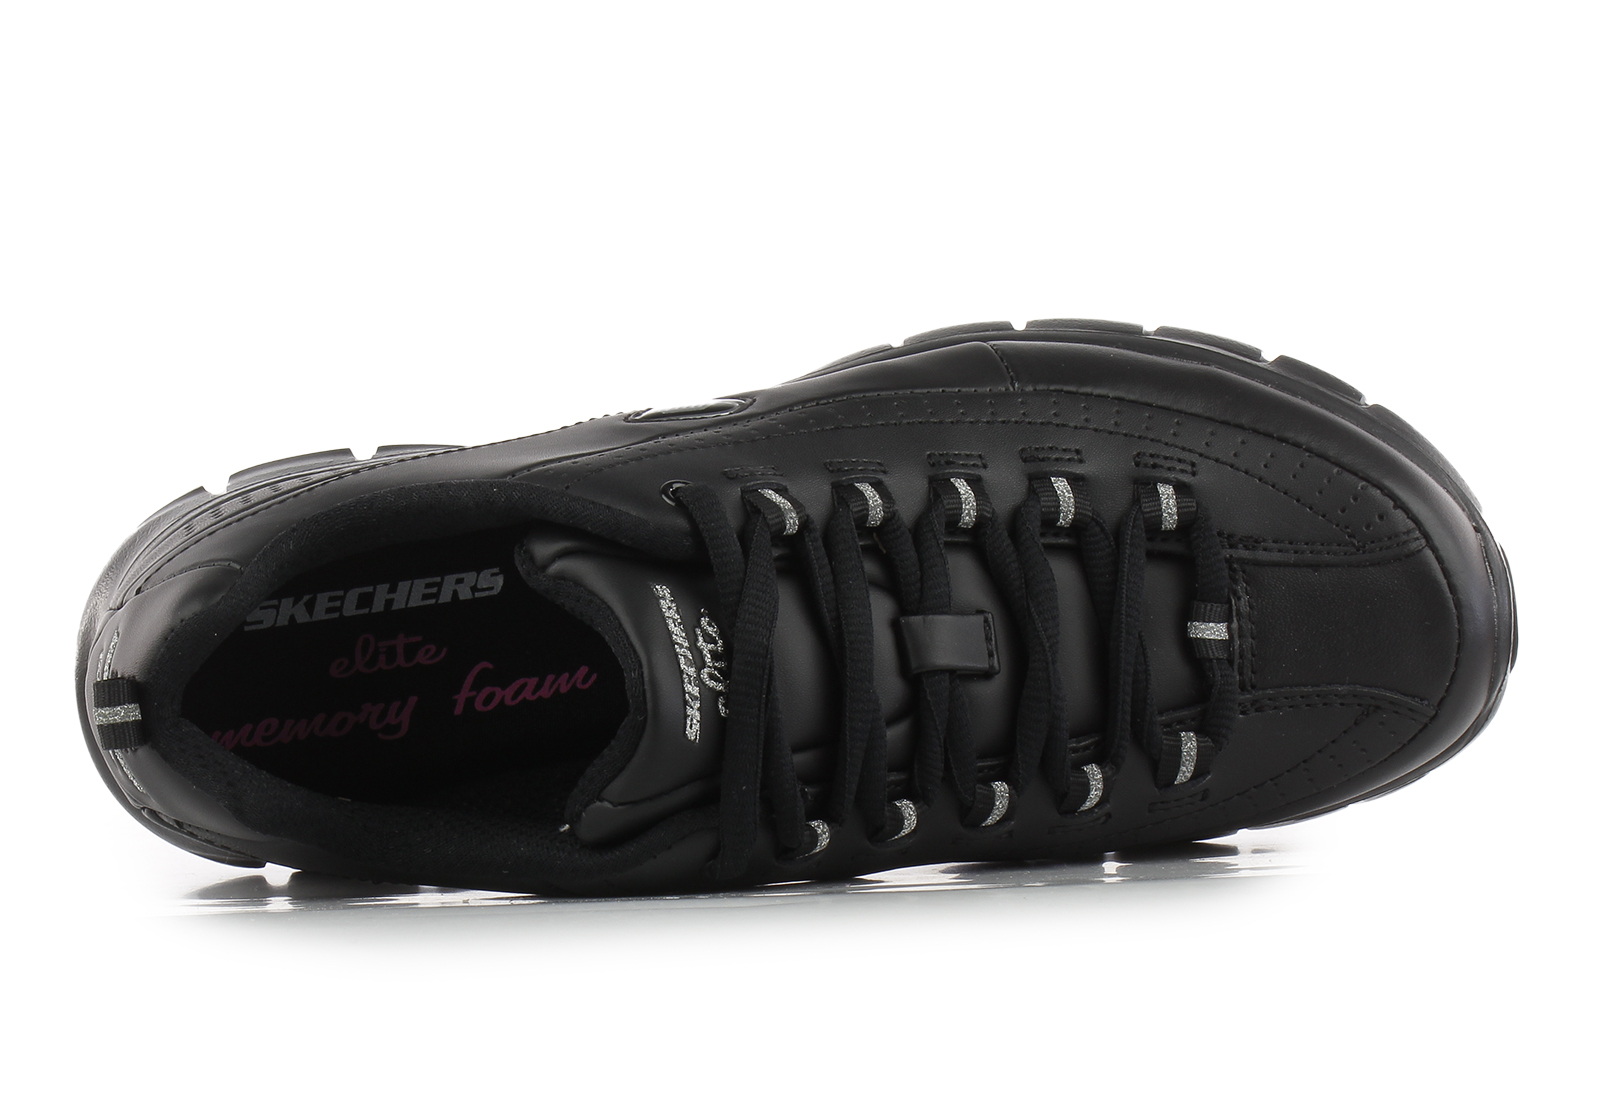 Adecuado ayudar Vamos Skechers Sneakers - Synergy-elite Status - 11798-BBK - Online shop for  sneakers, shoes and boots